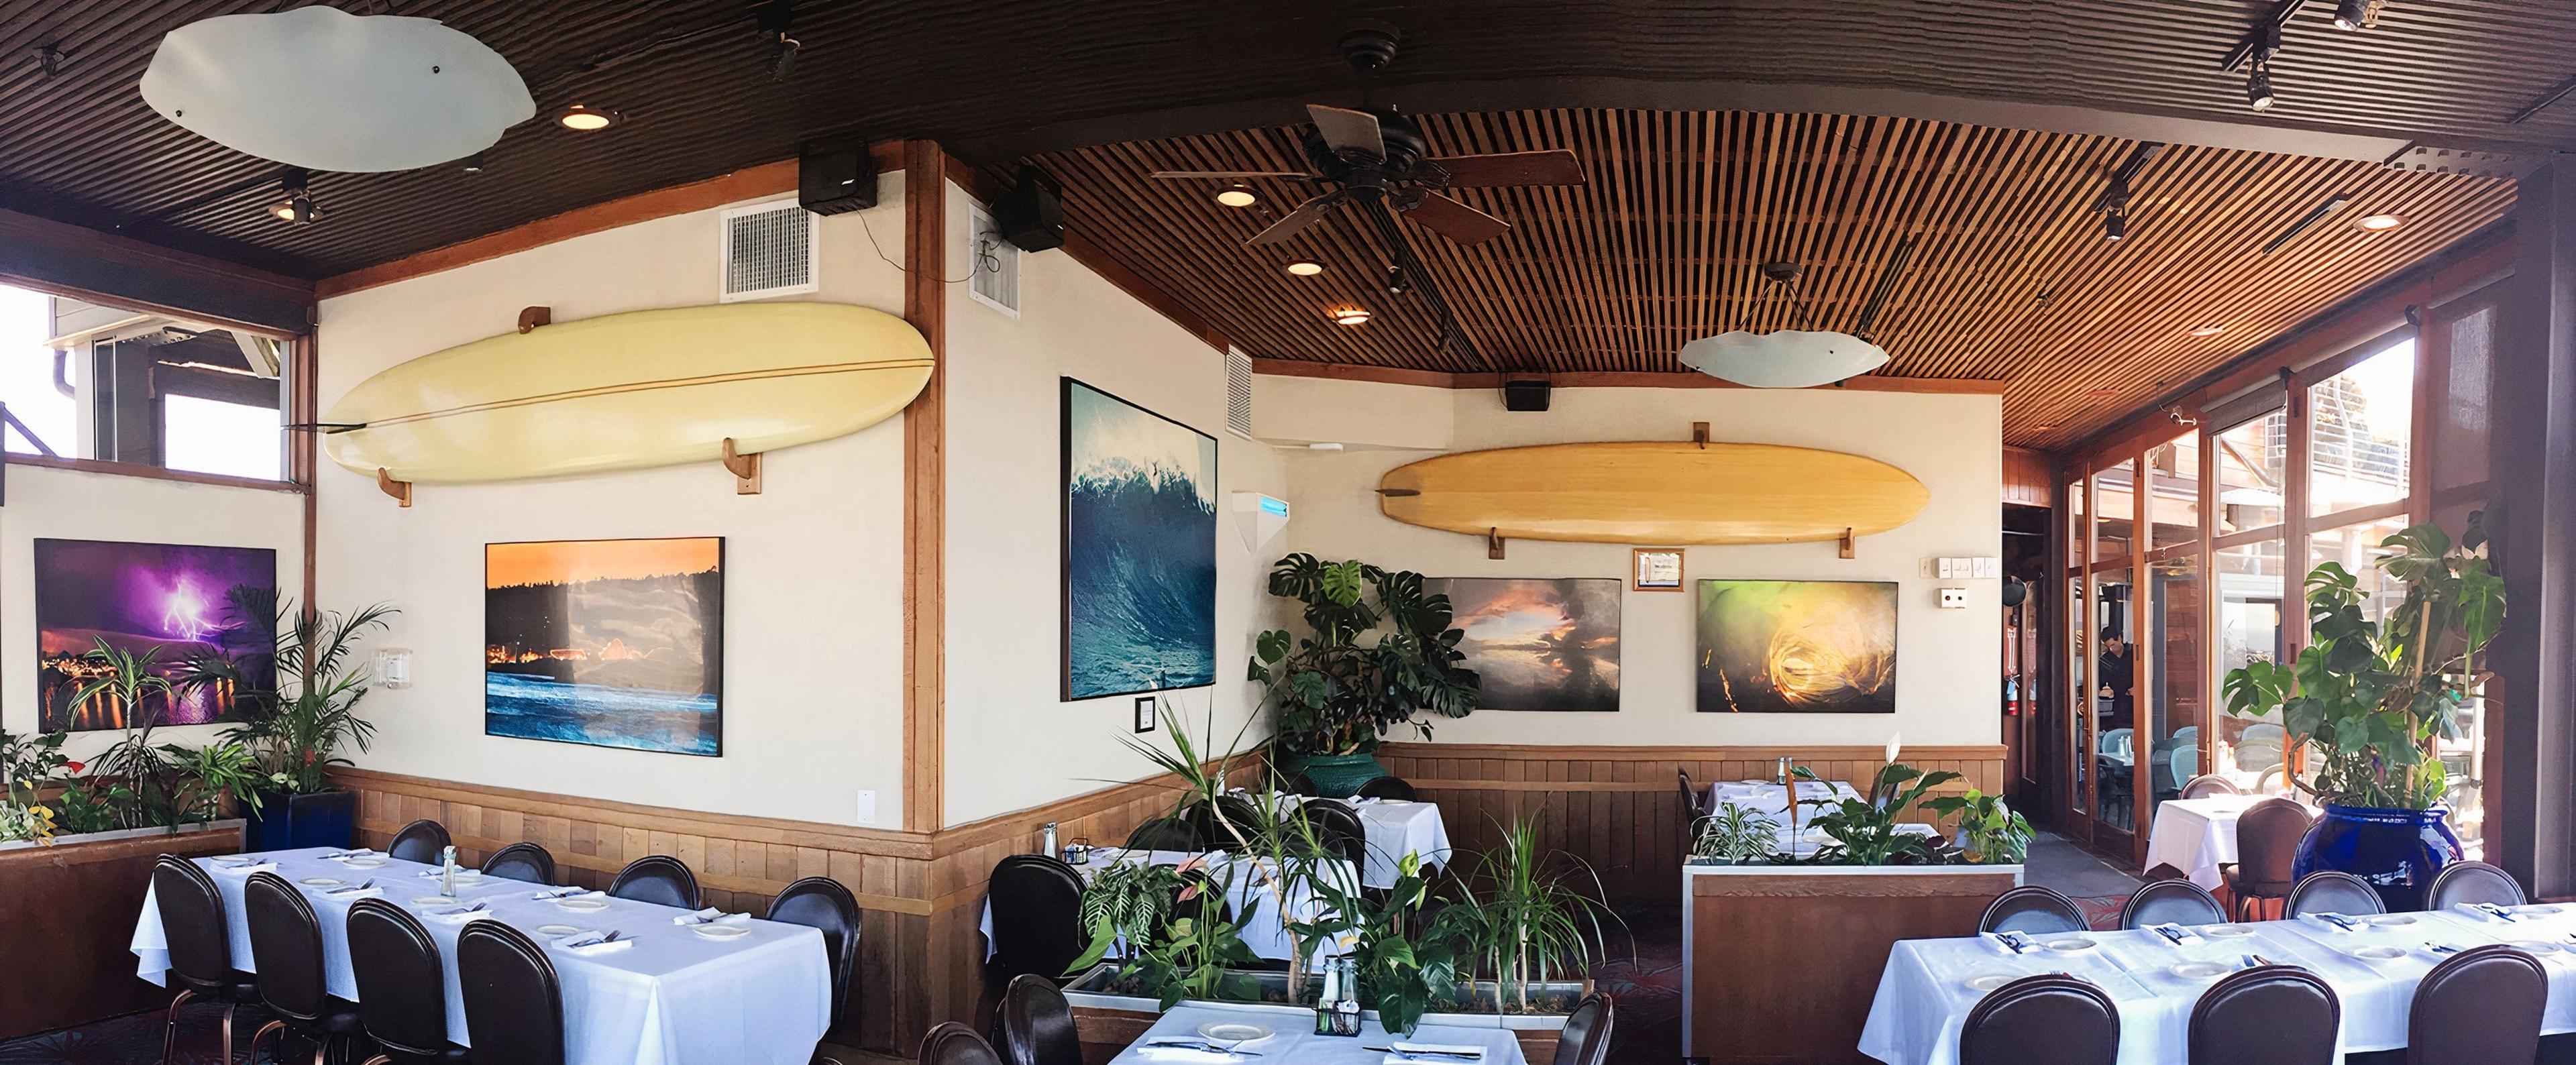 Crow's Nest Restaurant - Santa Cruz